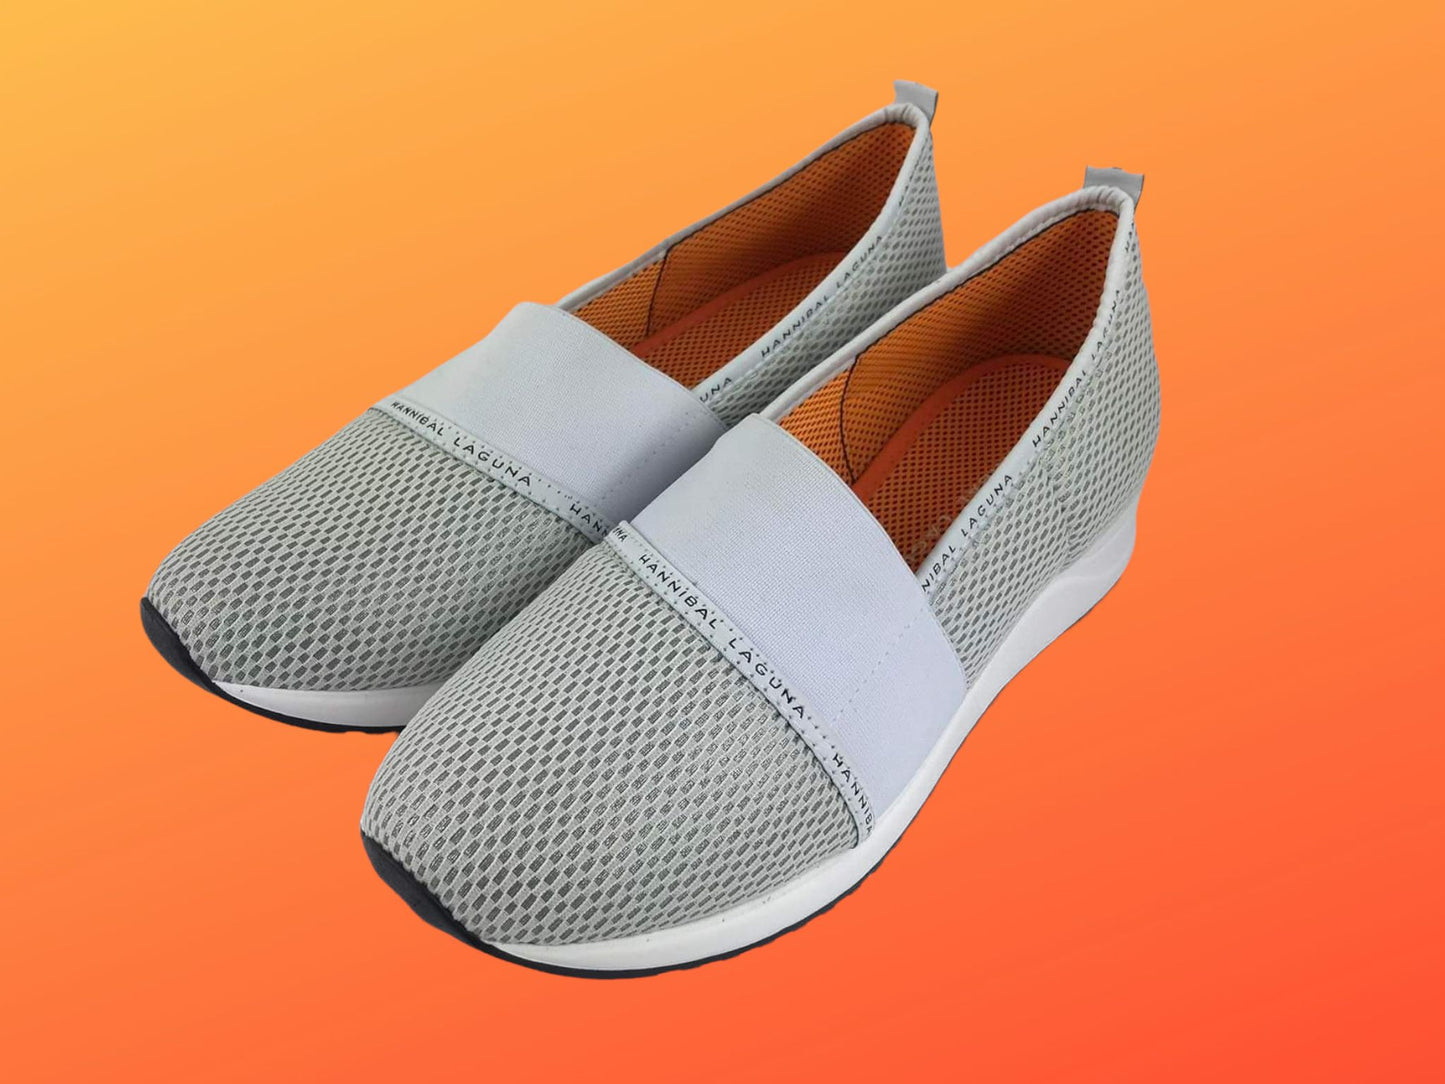 Hannibal Laguna | Women's slip-on tennis shoes with white Aloha elastics